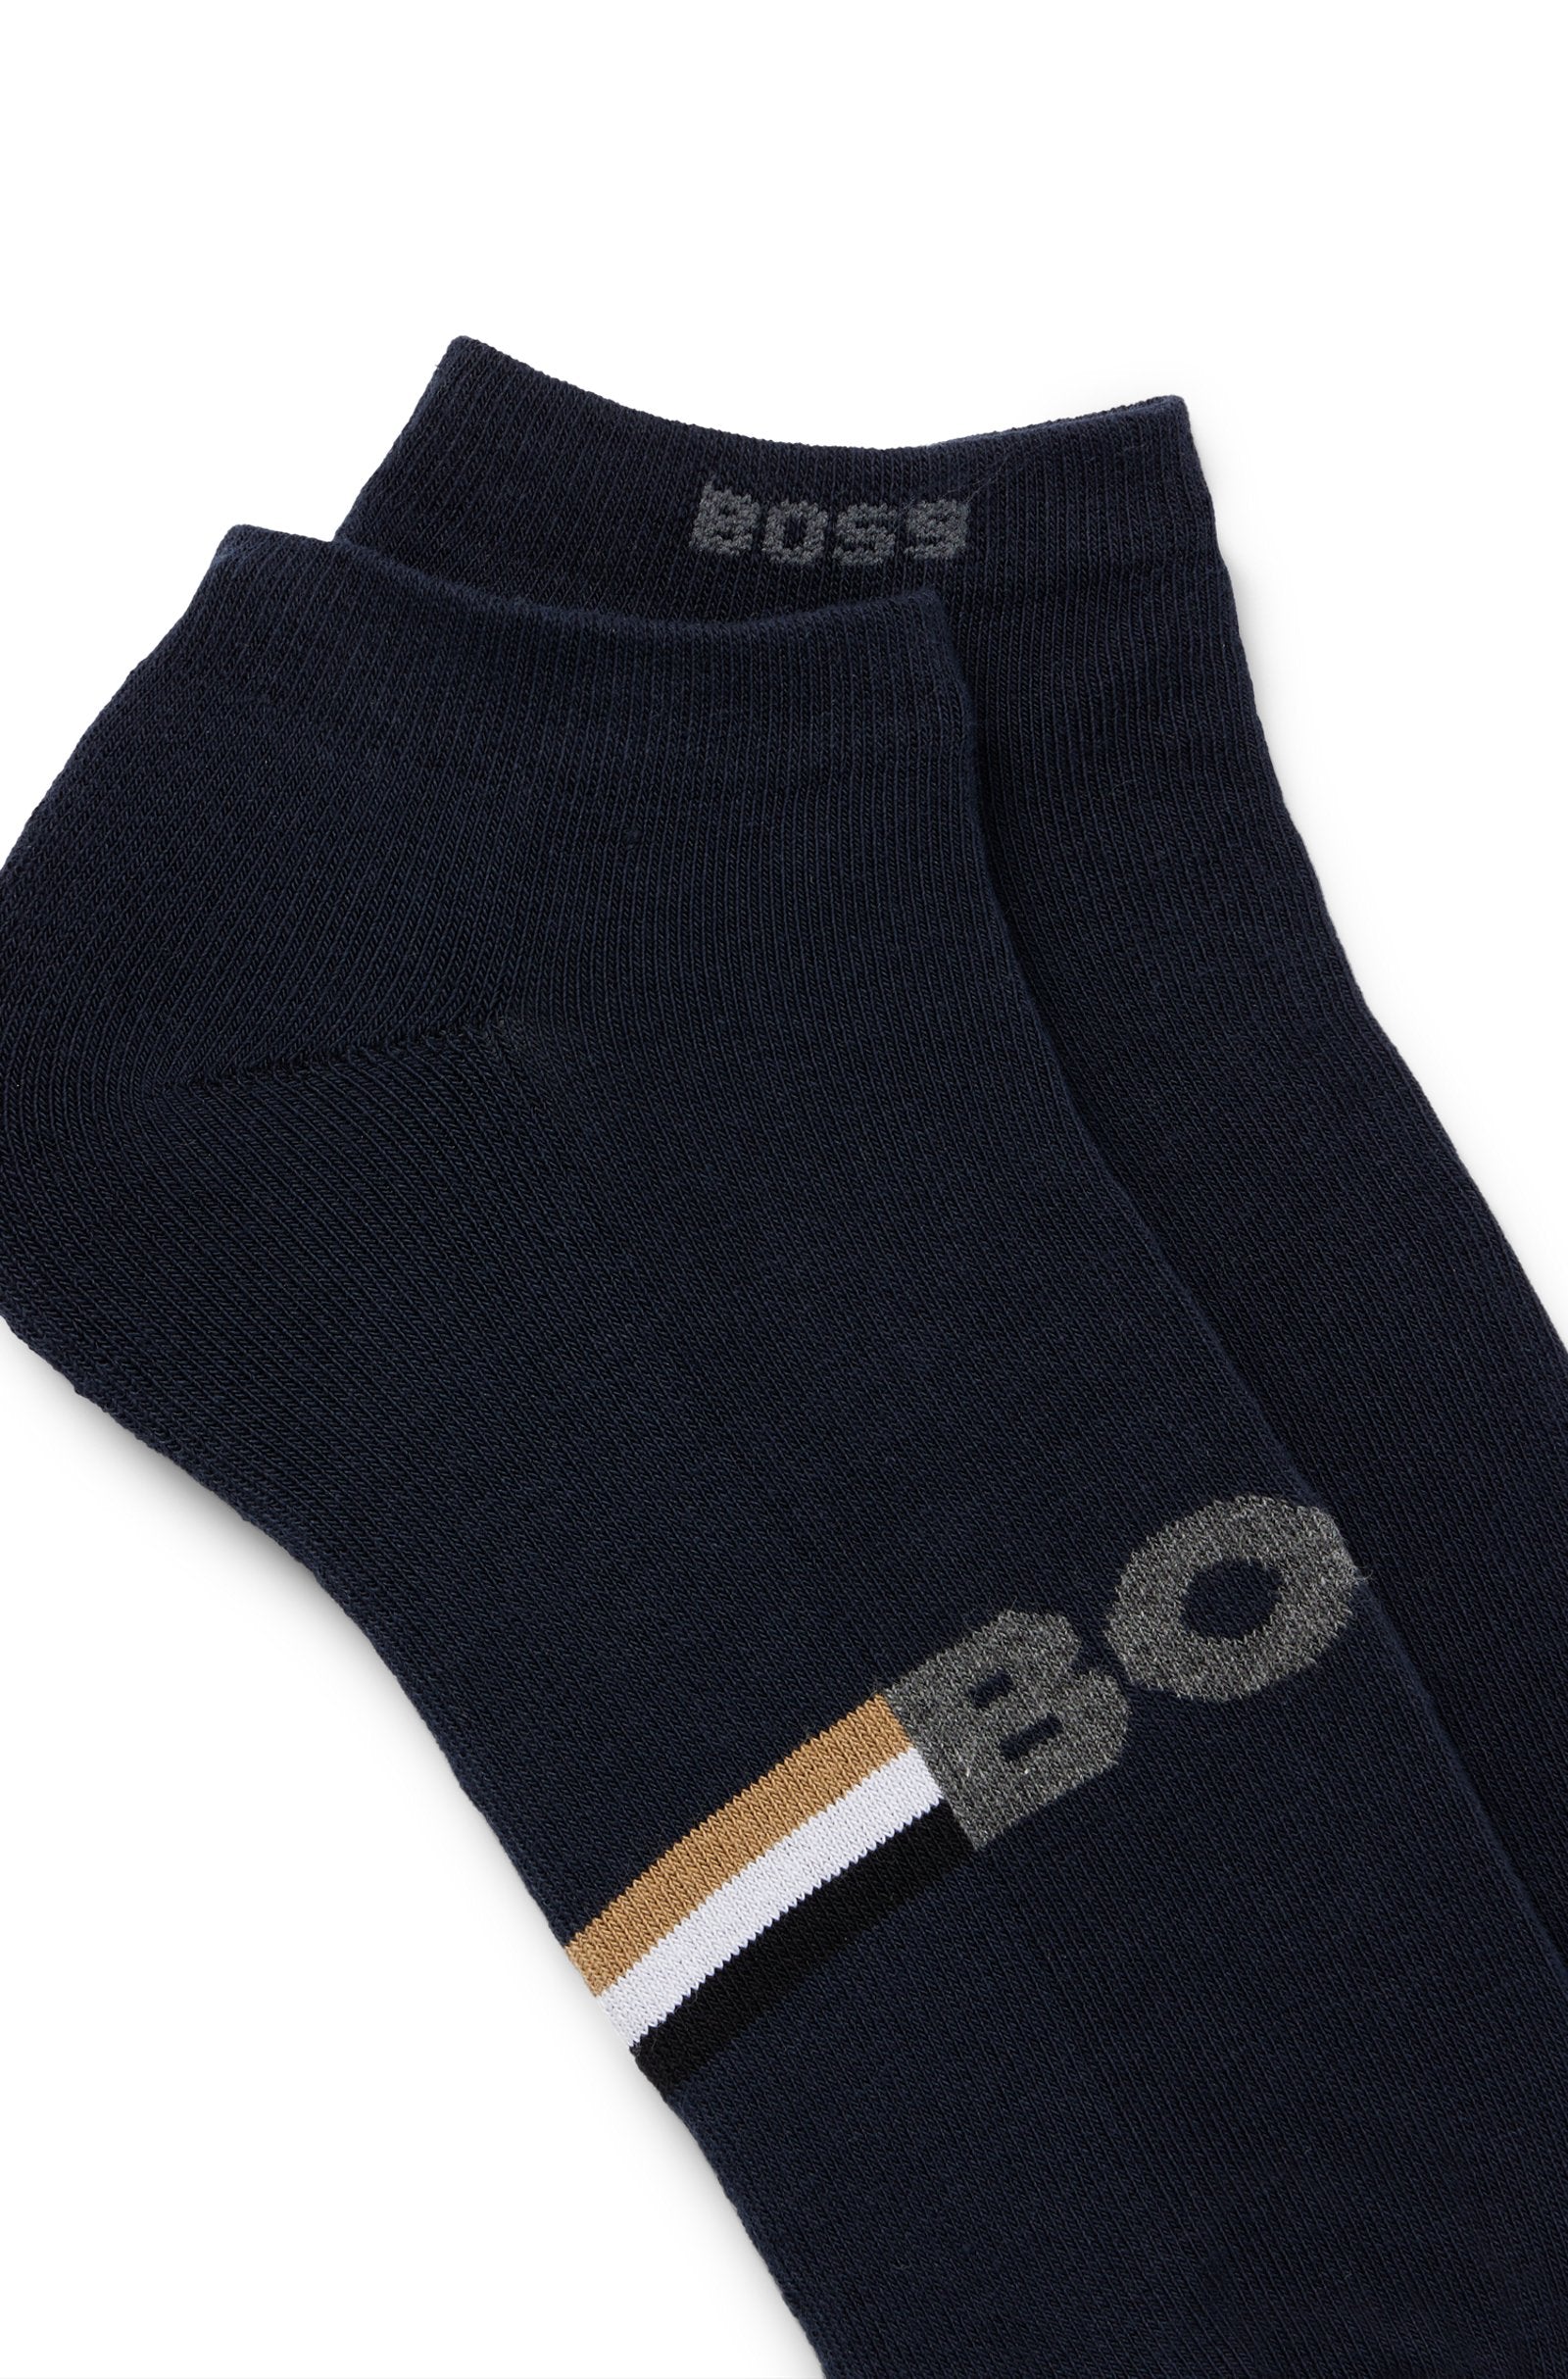 BOSS - 2-Pack Of Dark Blue Ankle Length Socks In a Cotton Blend 50510656 401